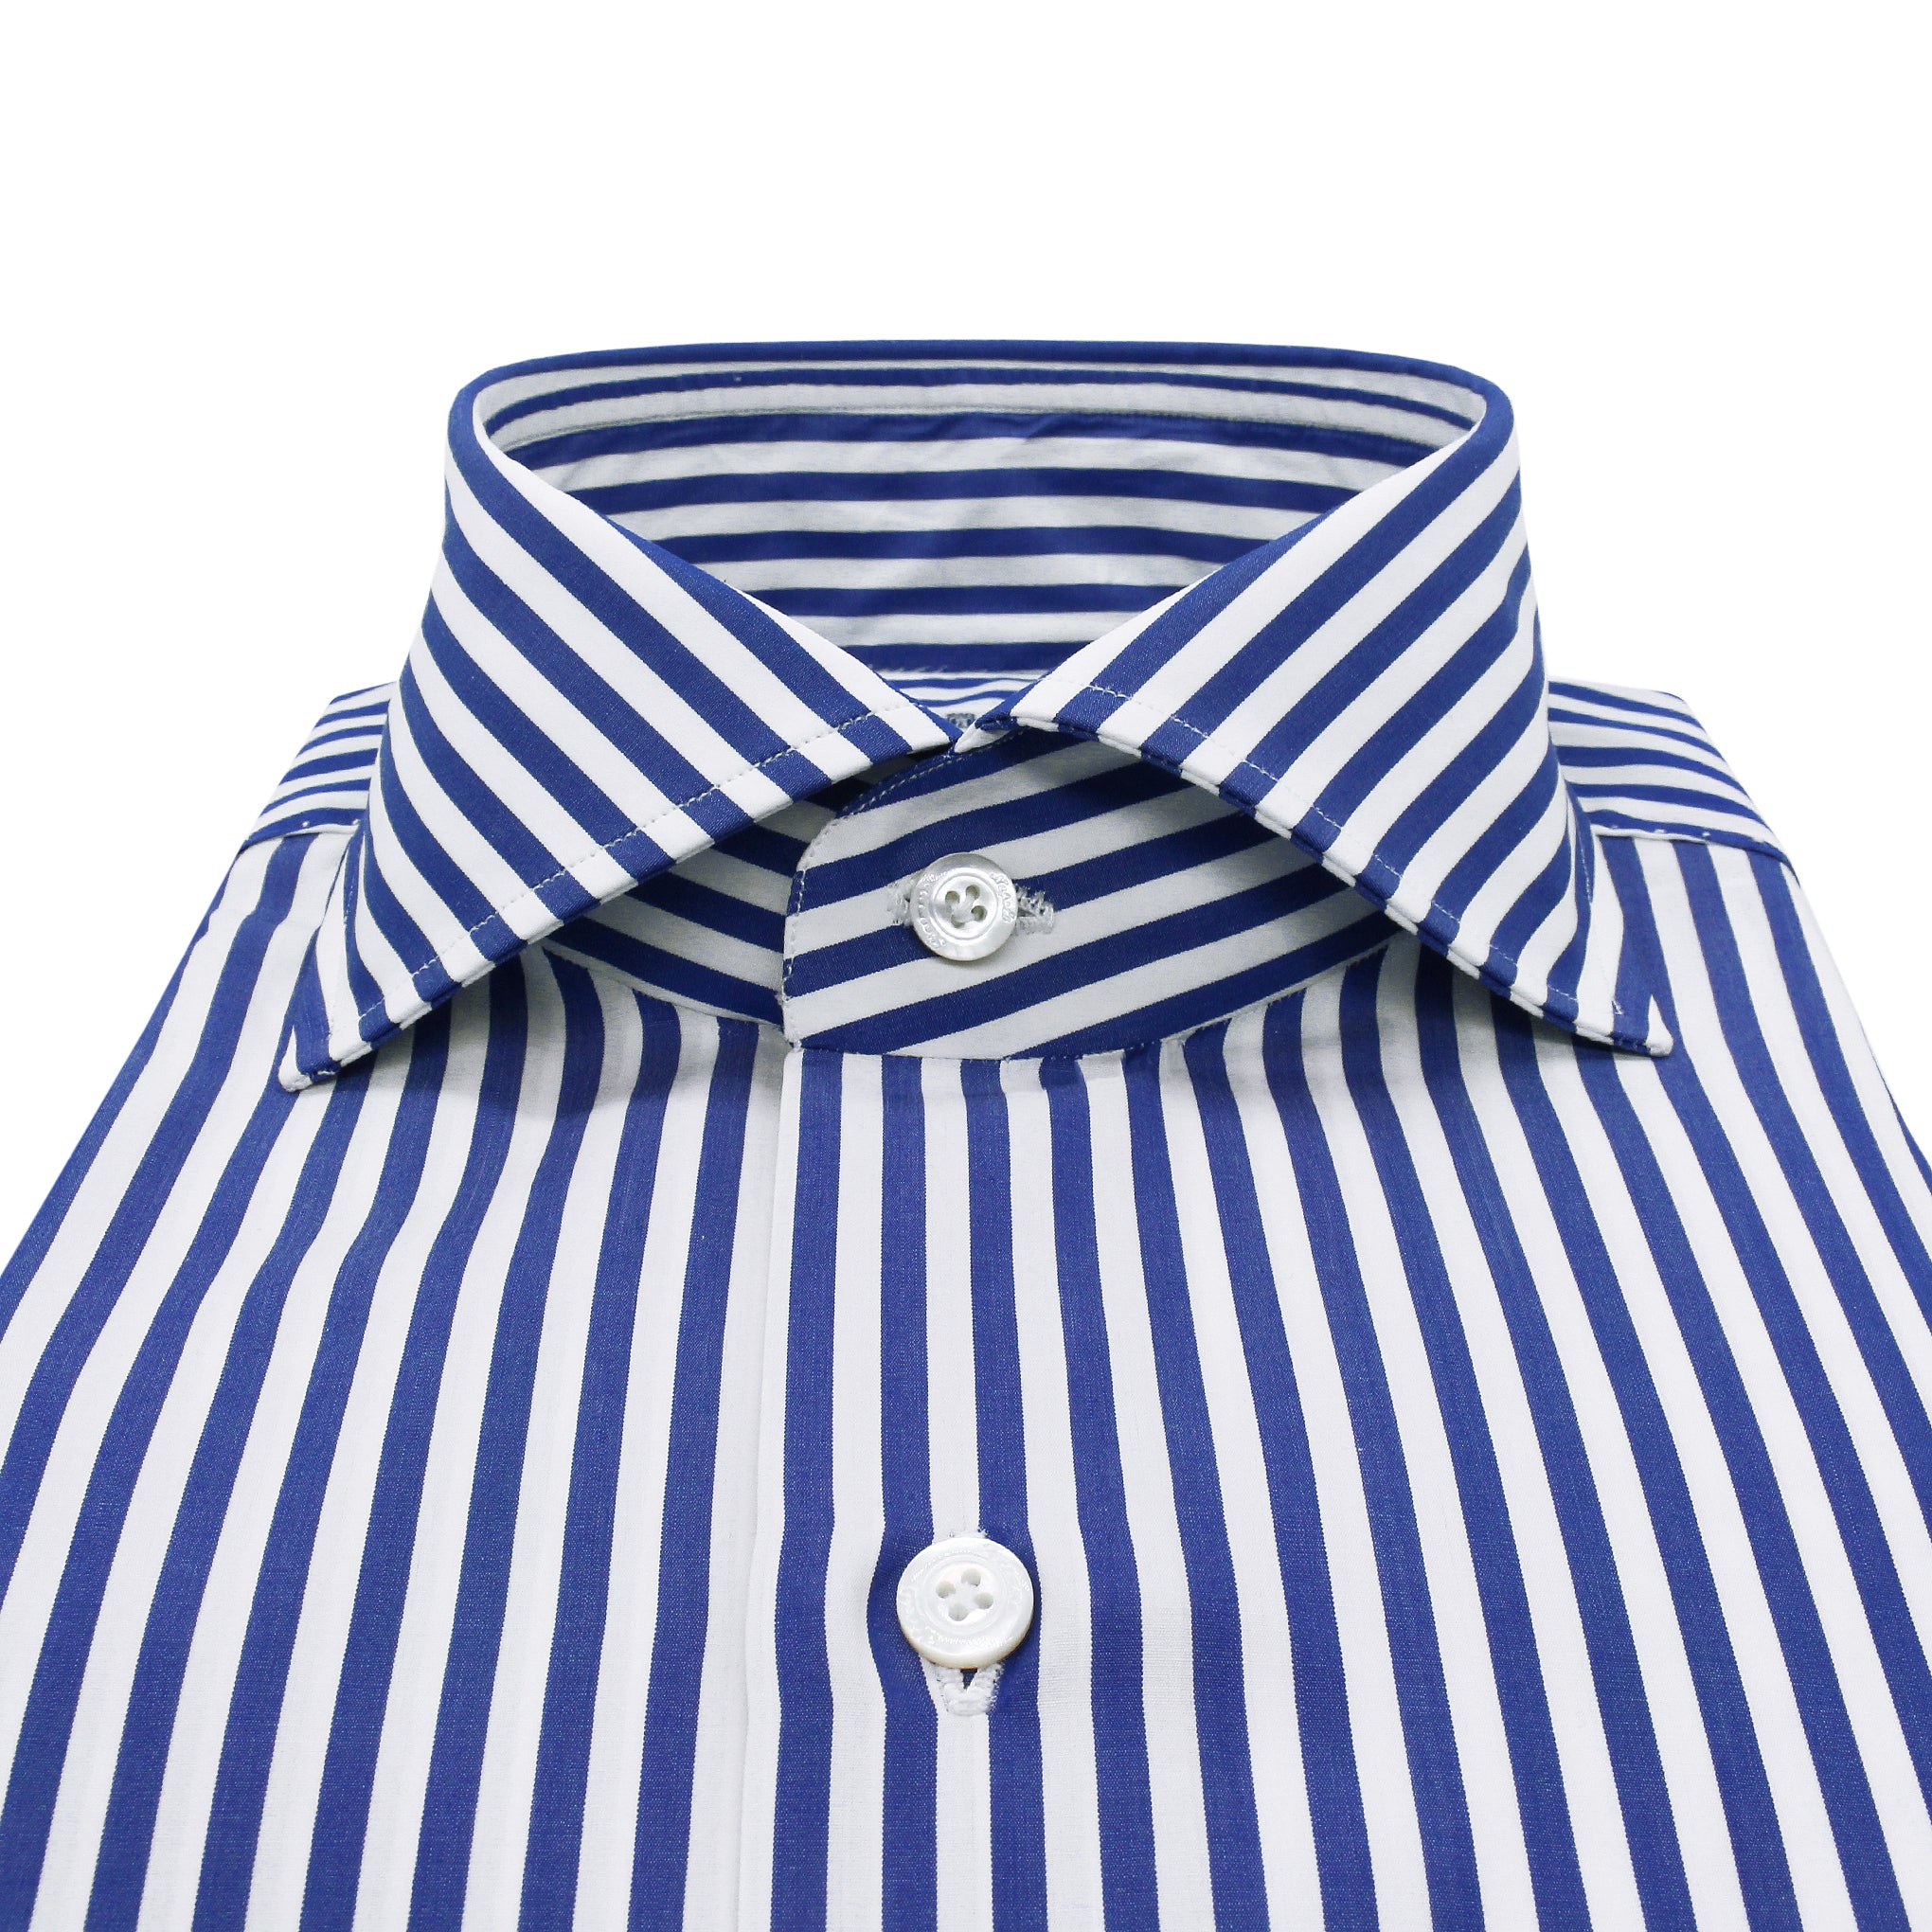 Dress shirt regular 170 a due striped blue and light blue Finamore 1925